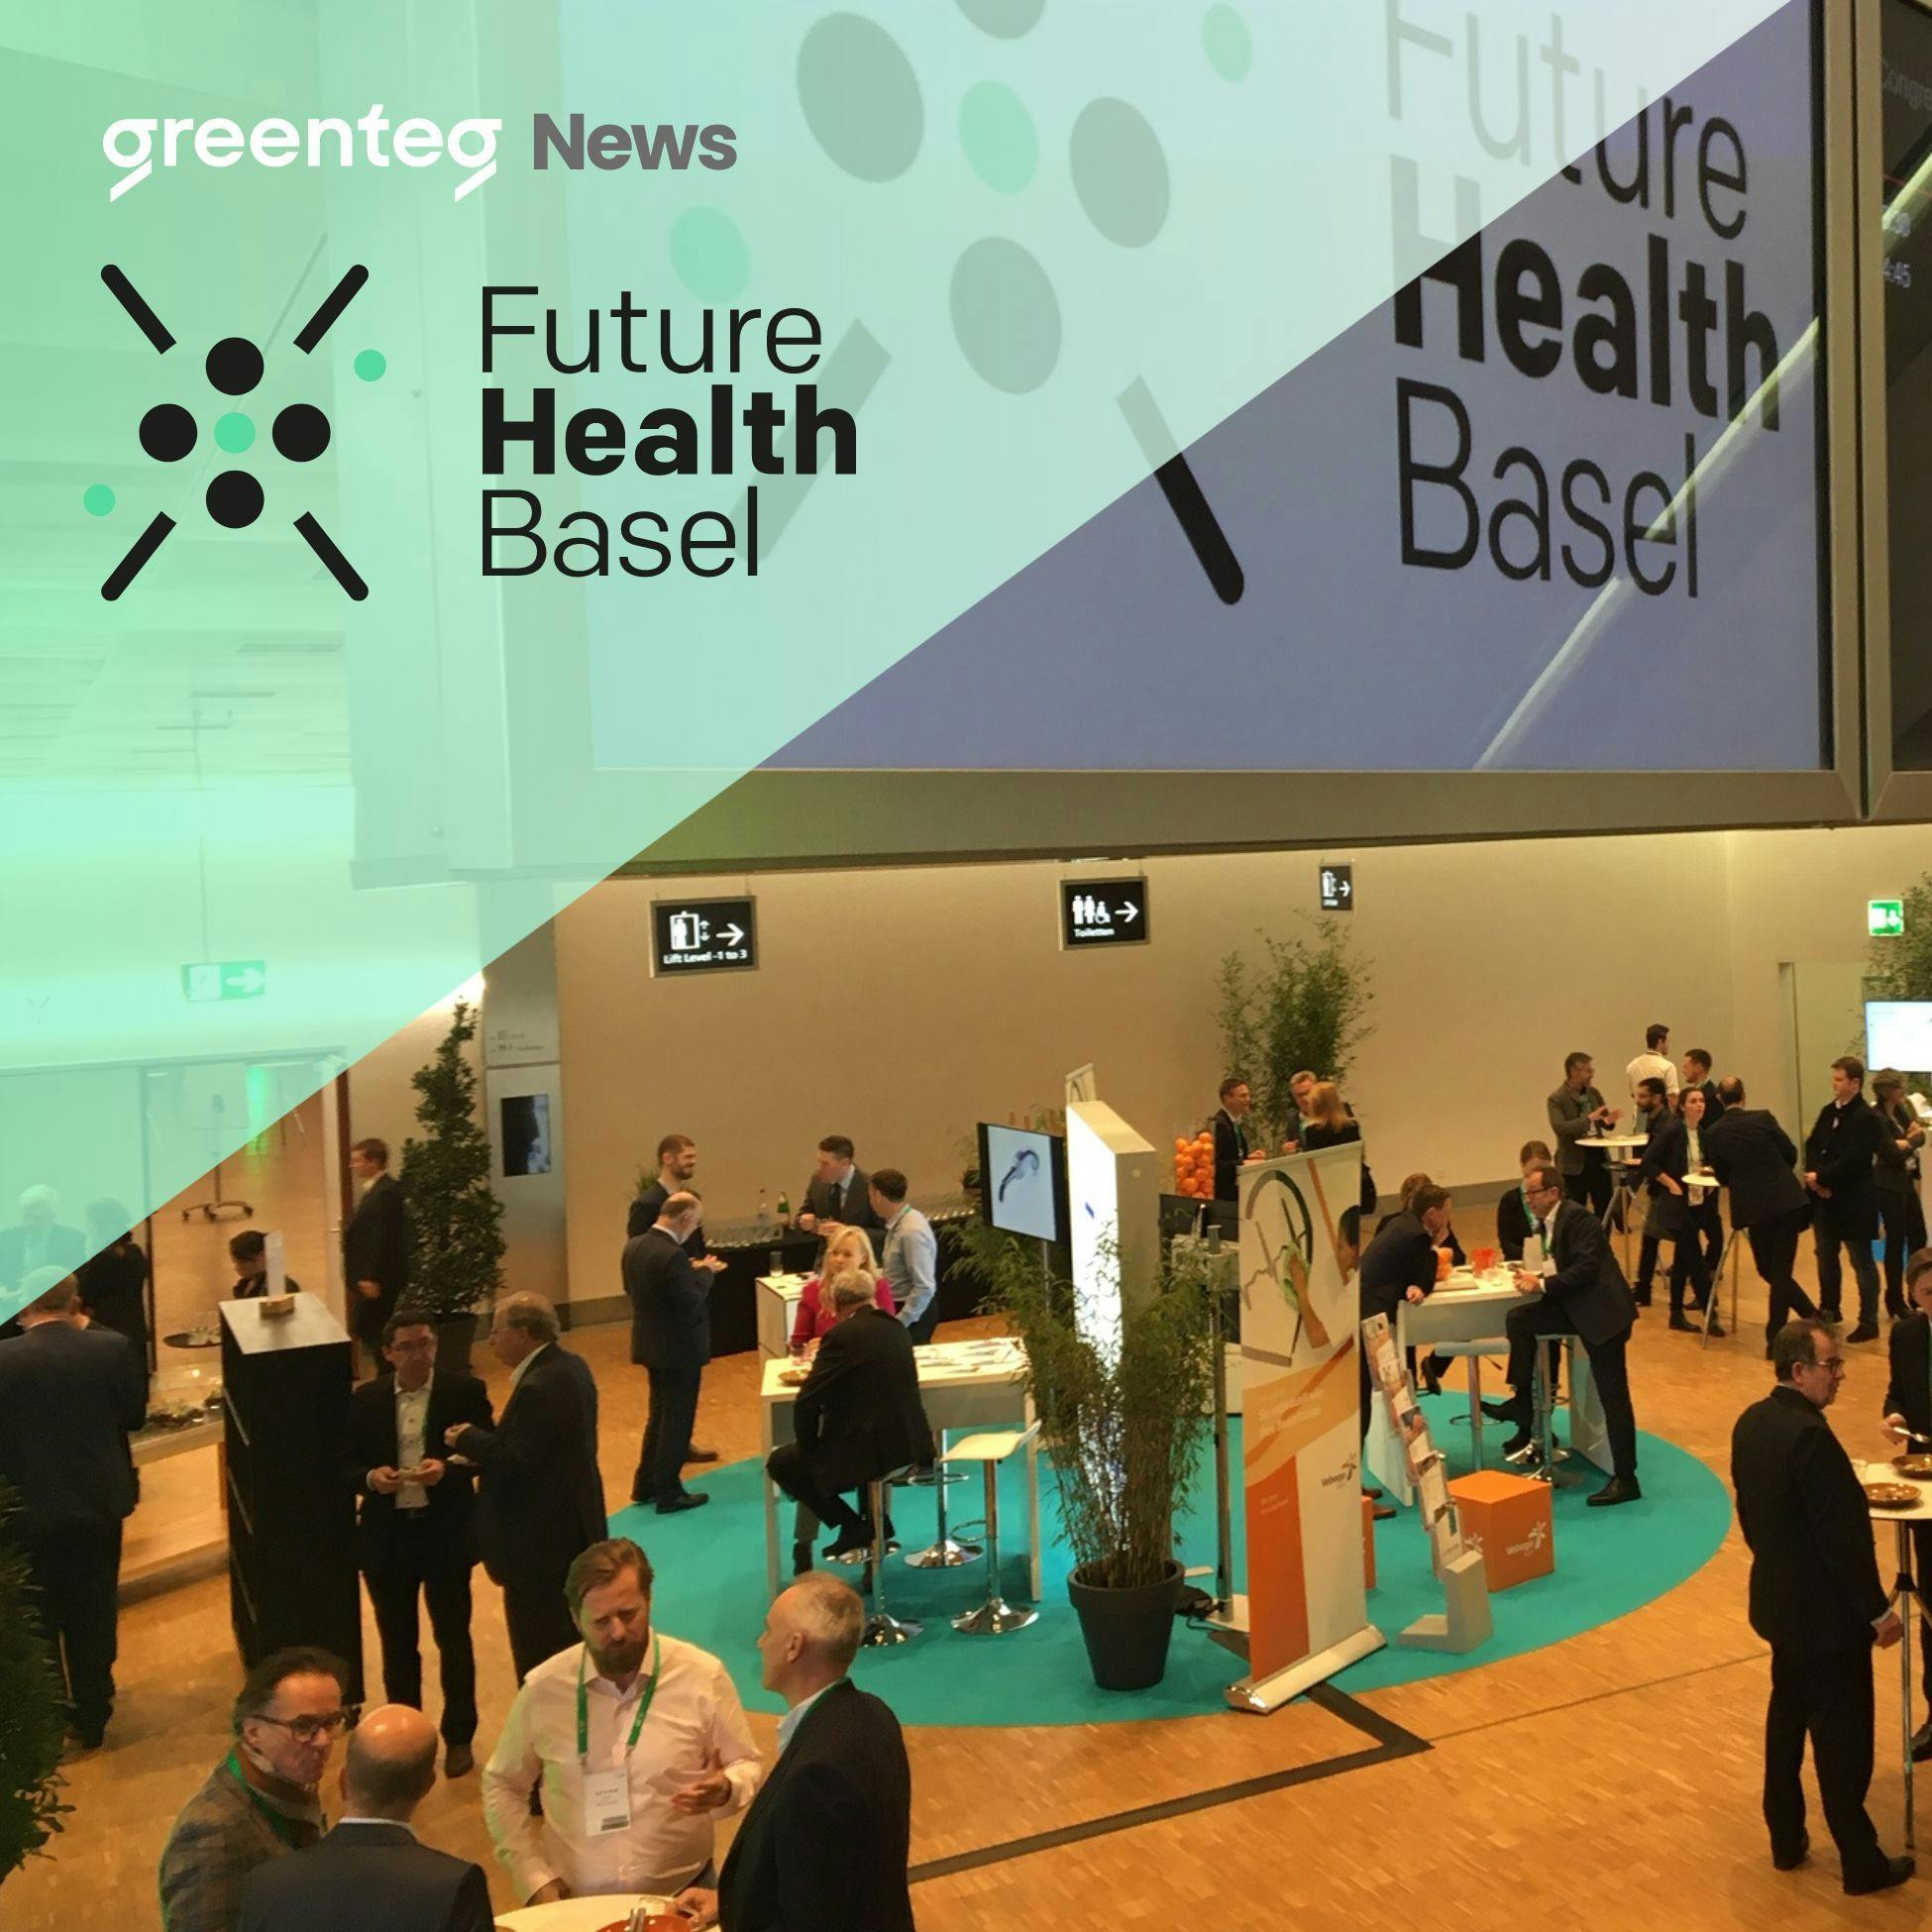 CEO Wulf Glatz to Speak at Future Health Conference in Basel